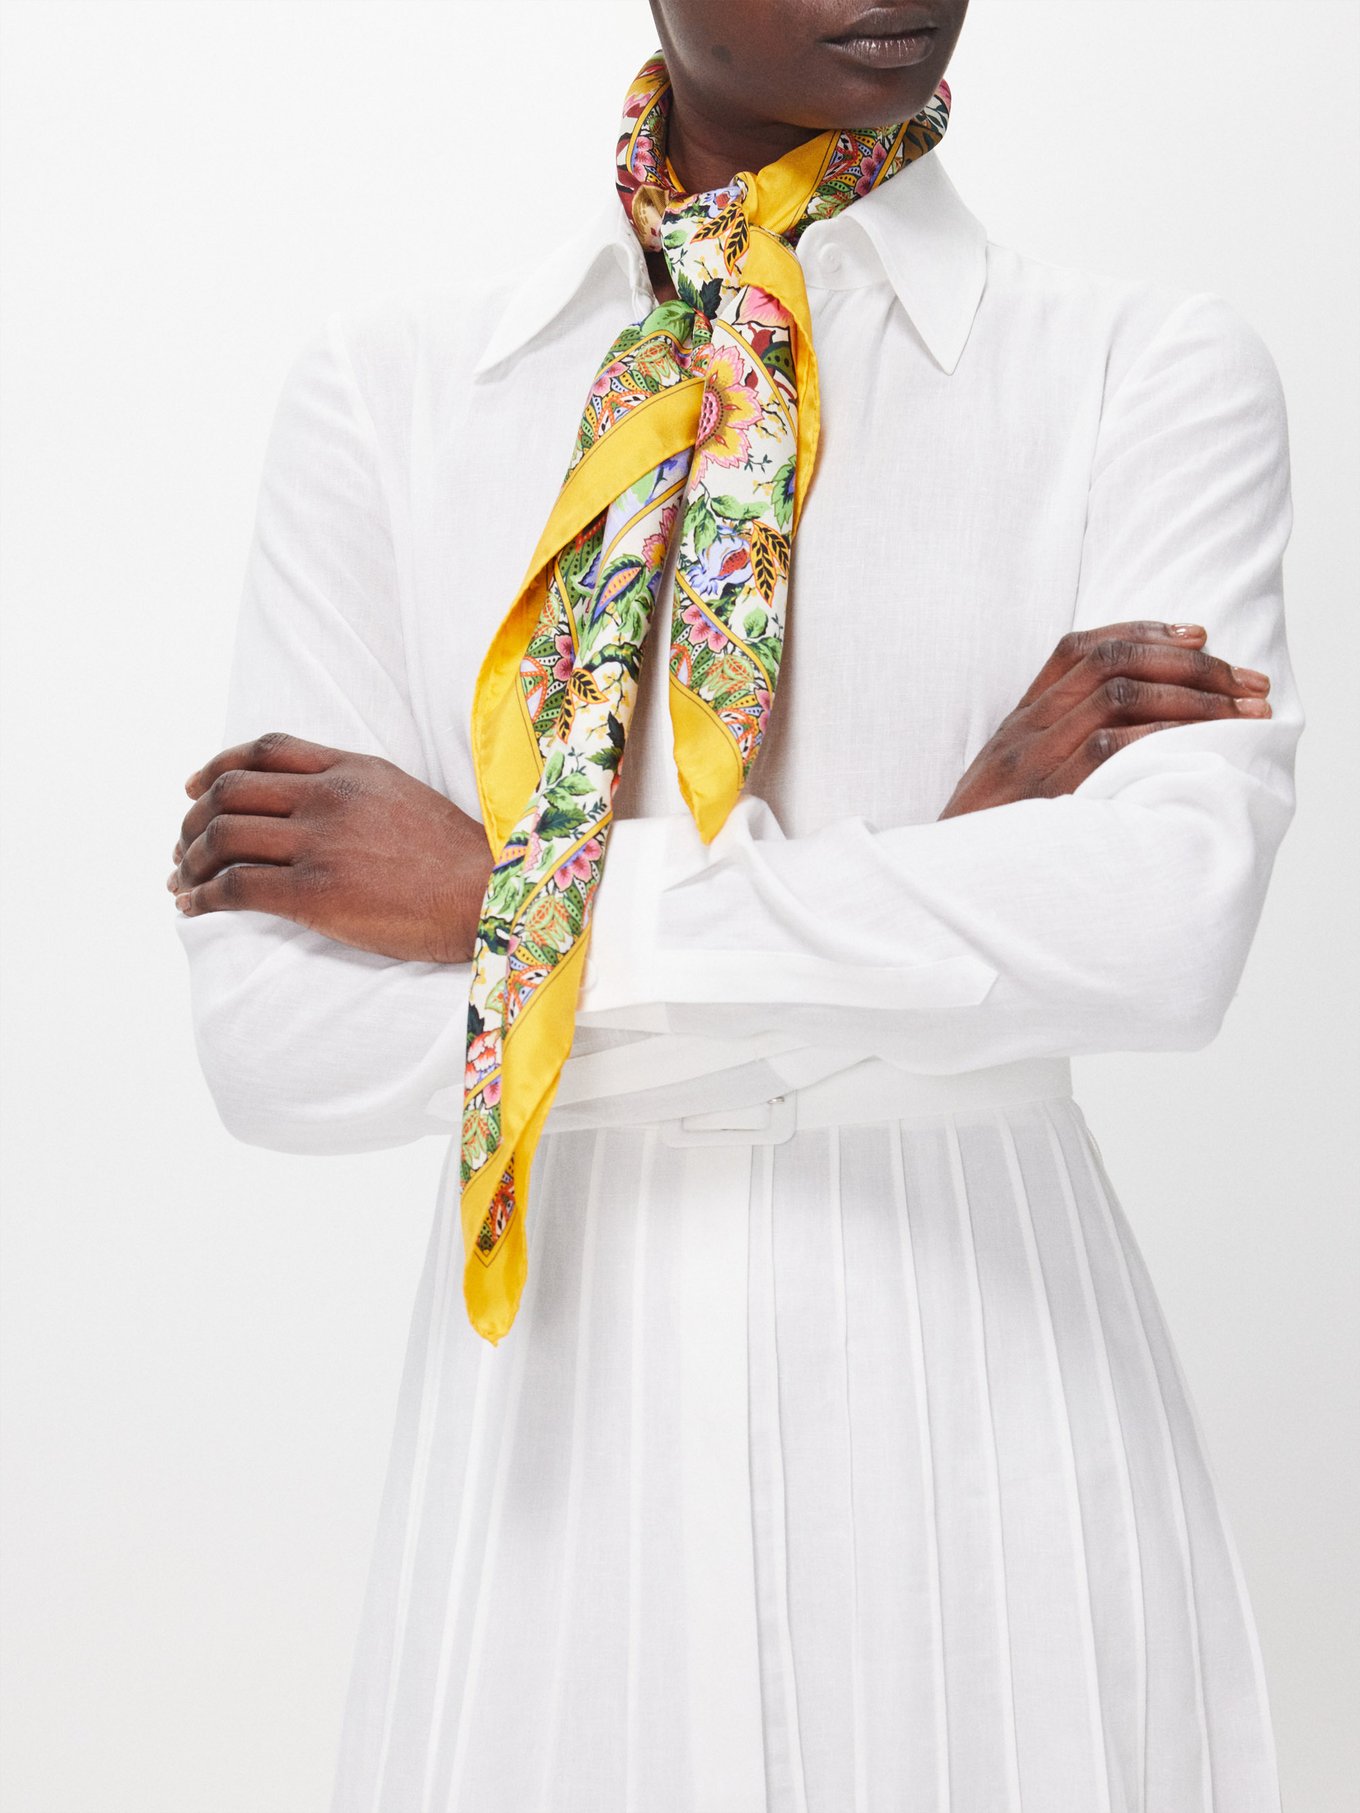 ETRO floral-print frayed-edge scarf - Multicolour